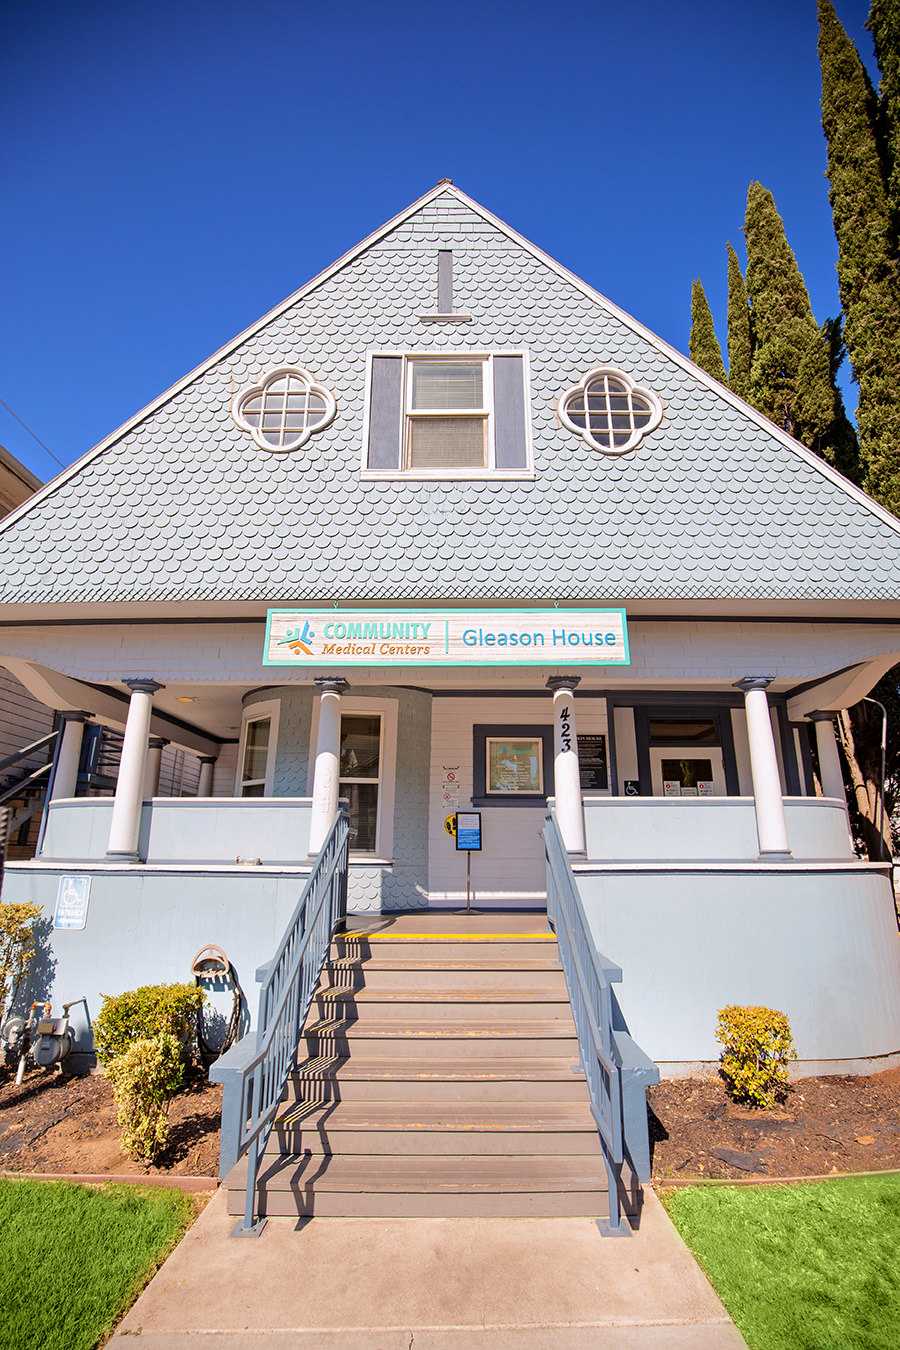 Community Medical Centers - Gleason House